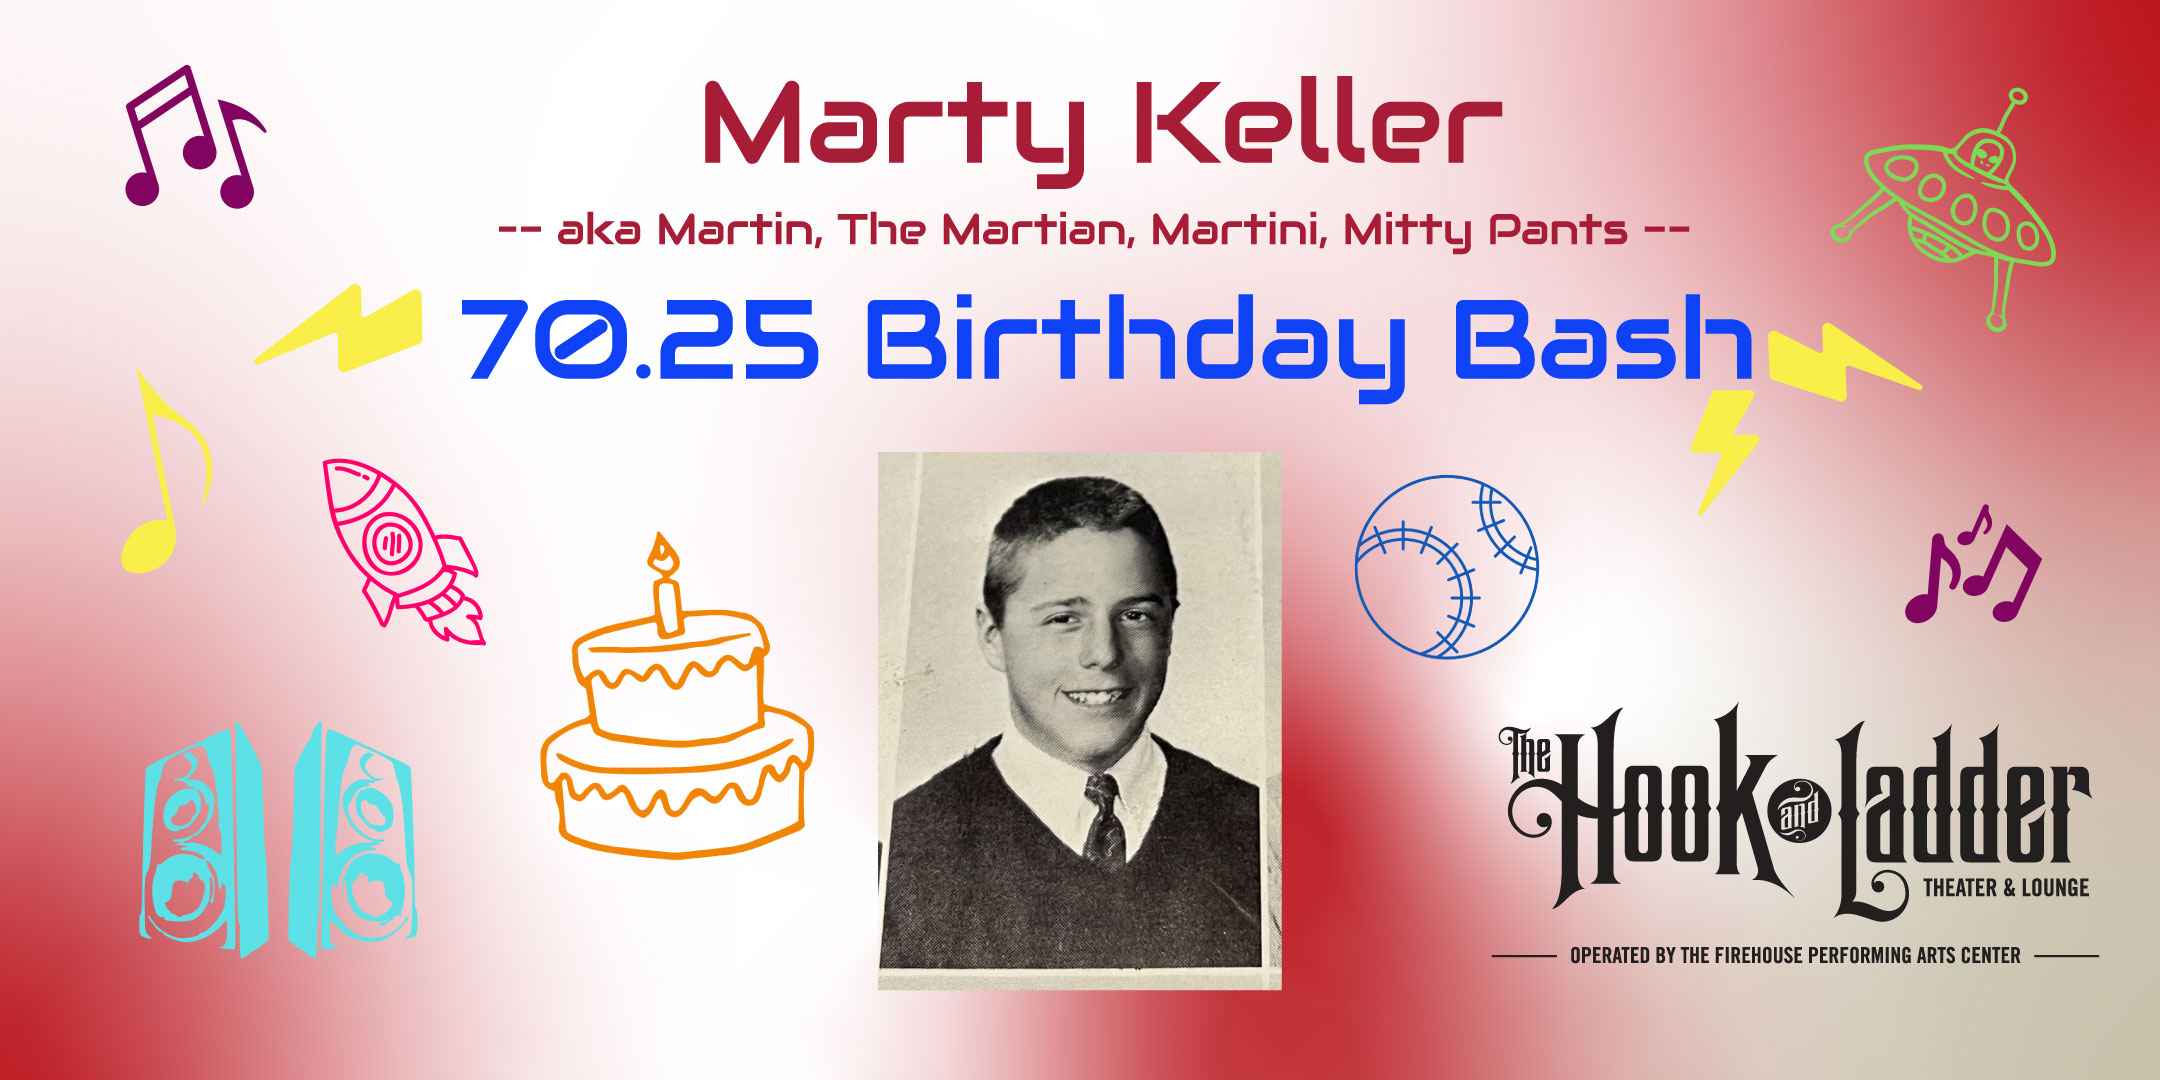 Martin Keller Birthday Party Sunday, March 26 3-7pm